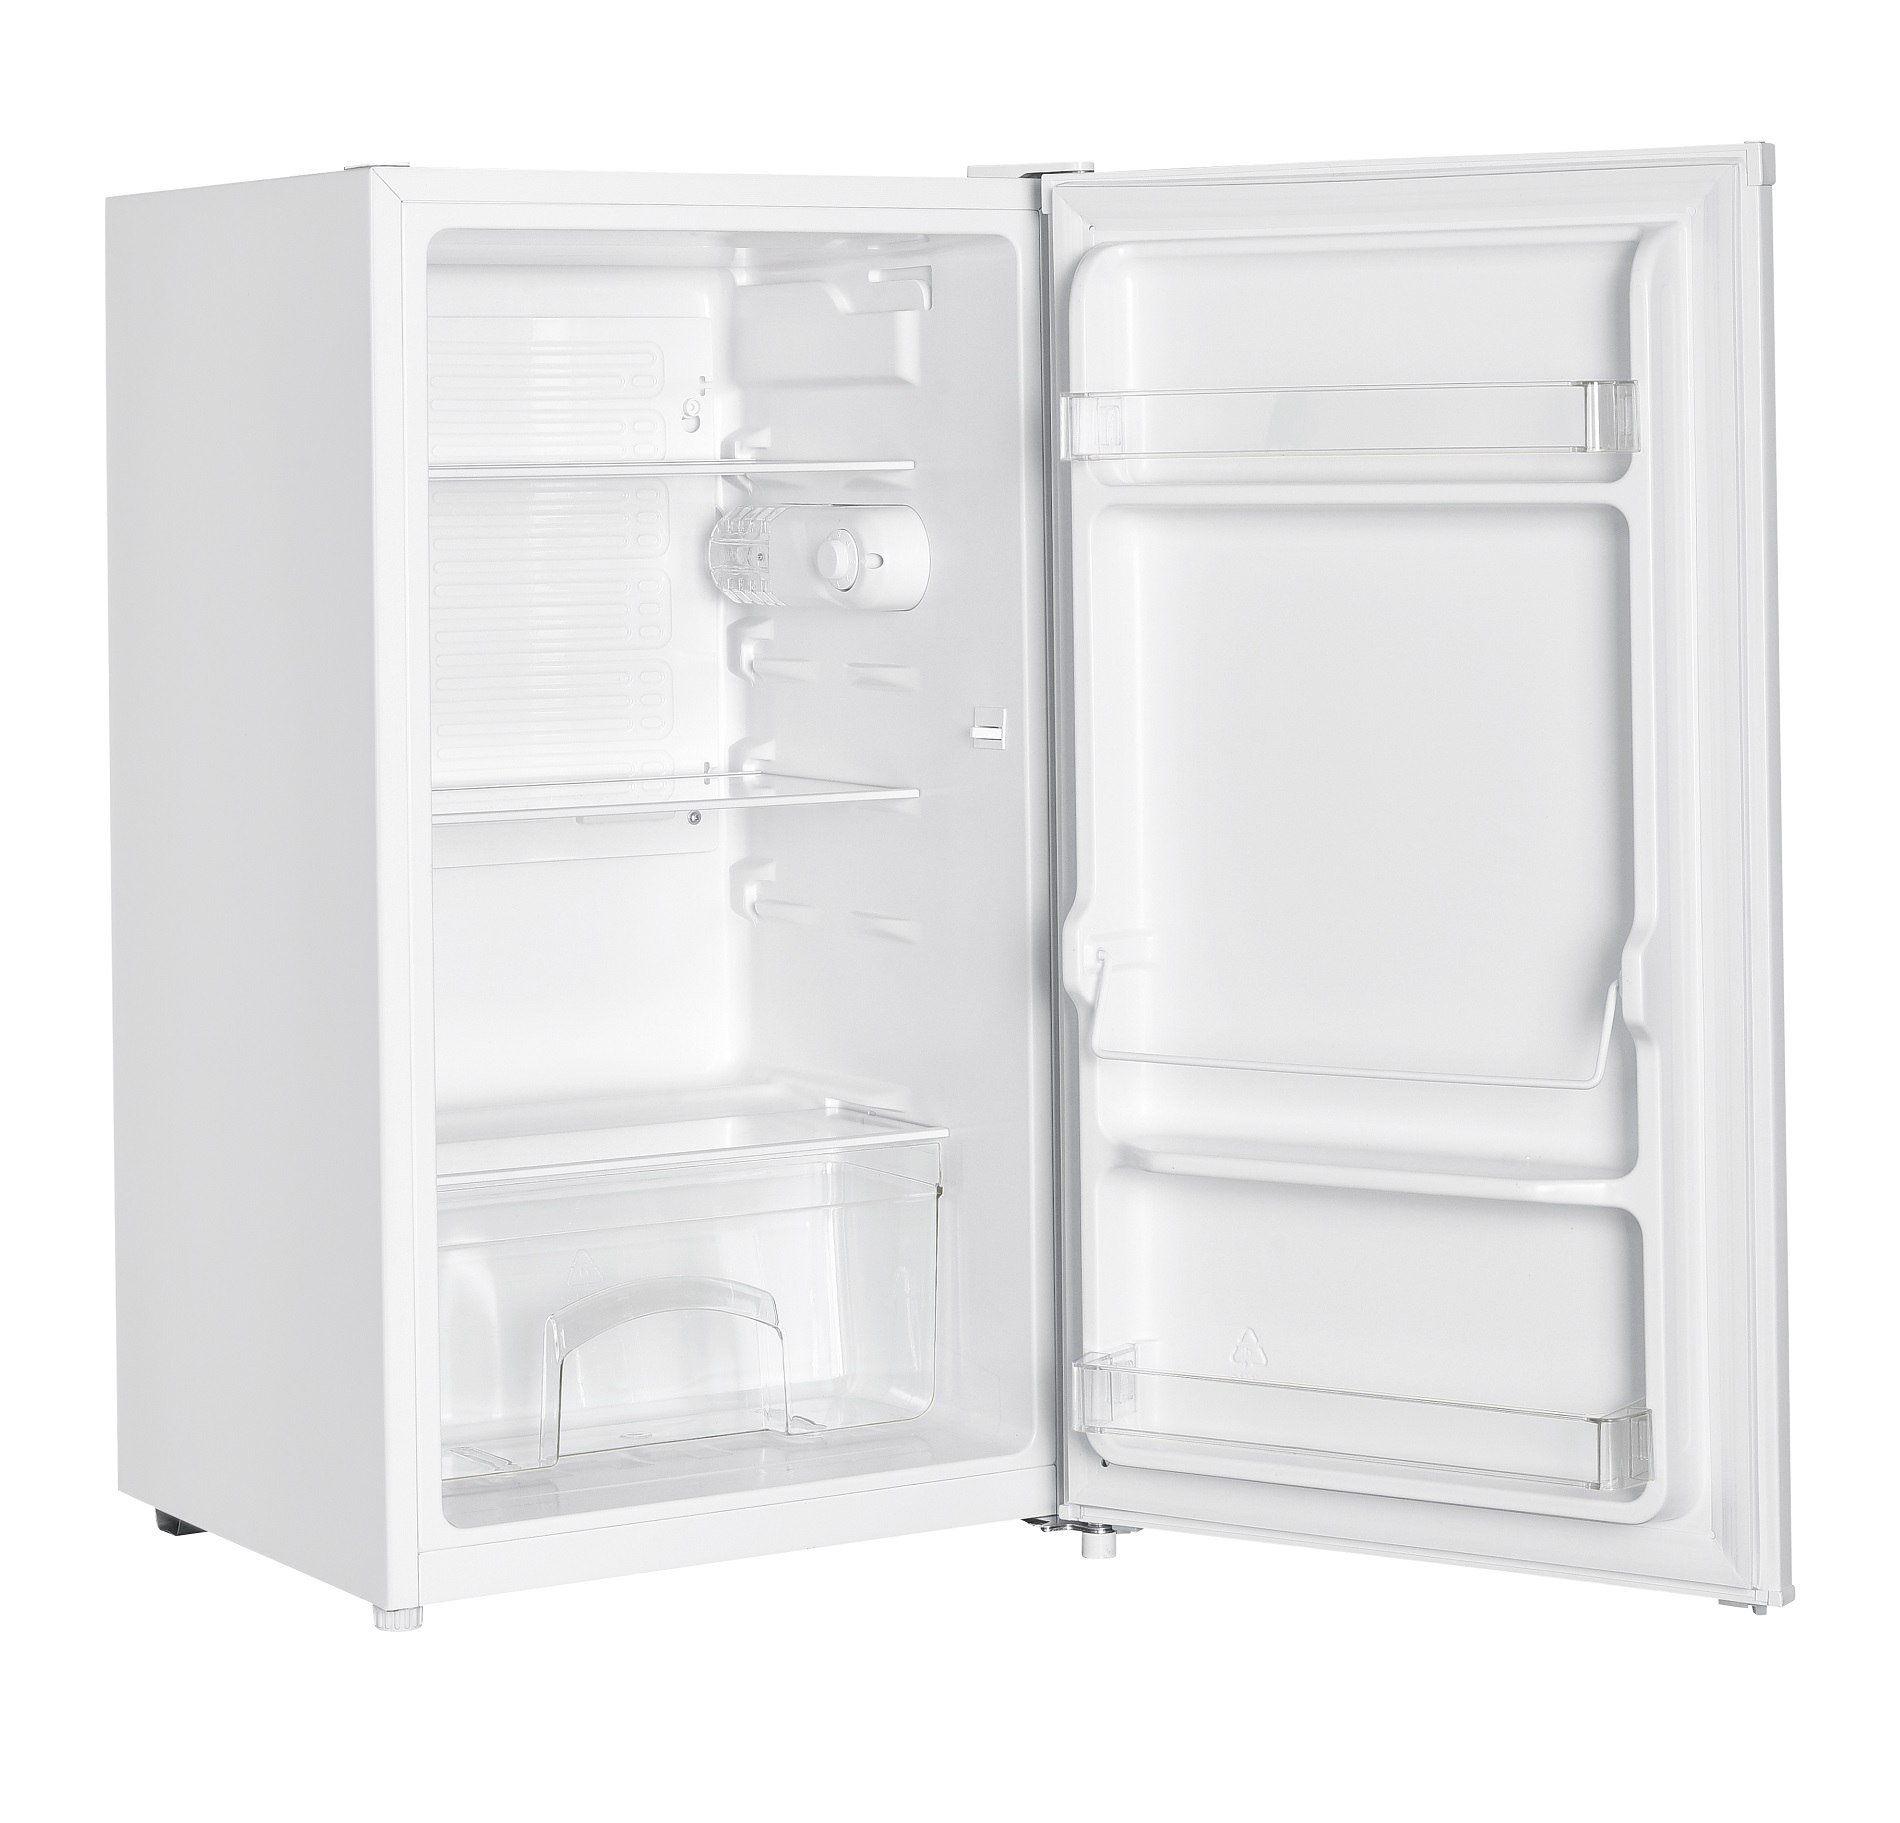 Single door refrigerators - RS0880H - Tesla Innovations